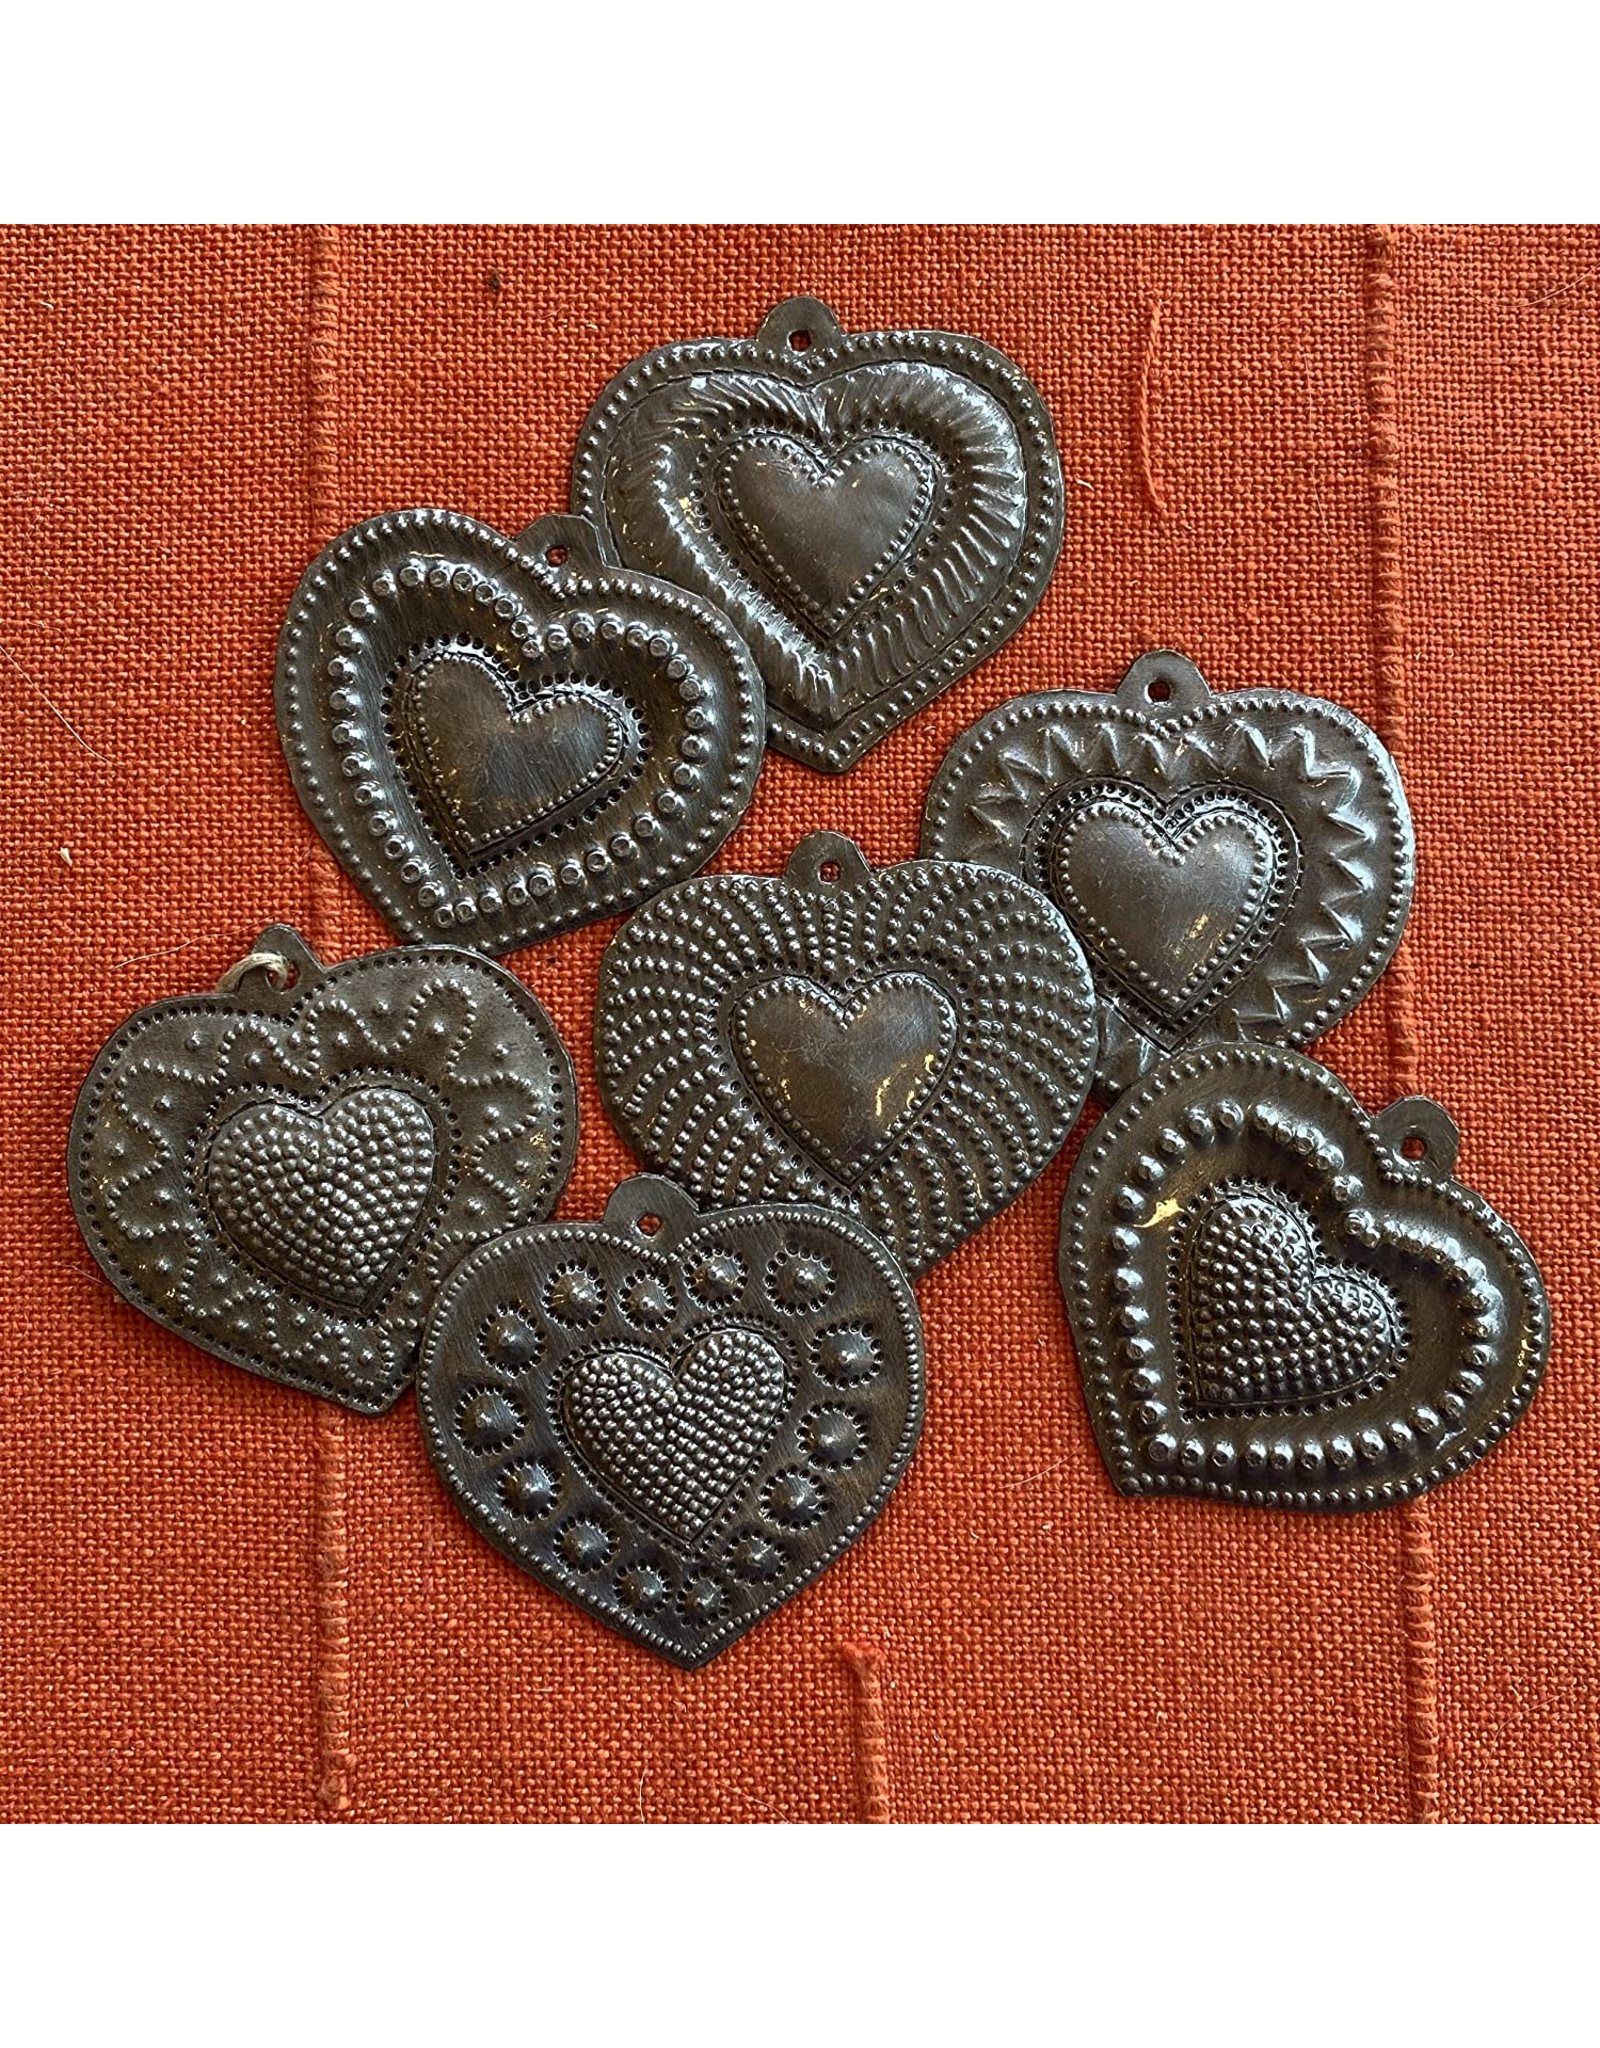 Haiti Milagros Heart ornament, assorted, Haiti